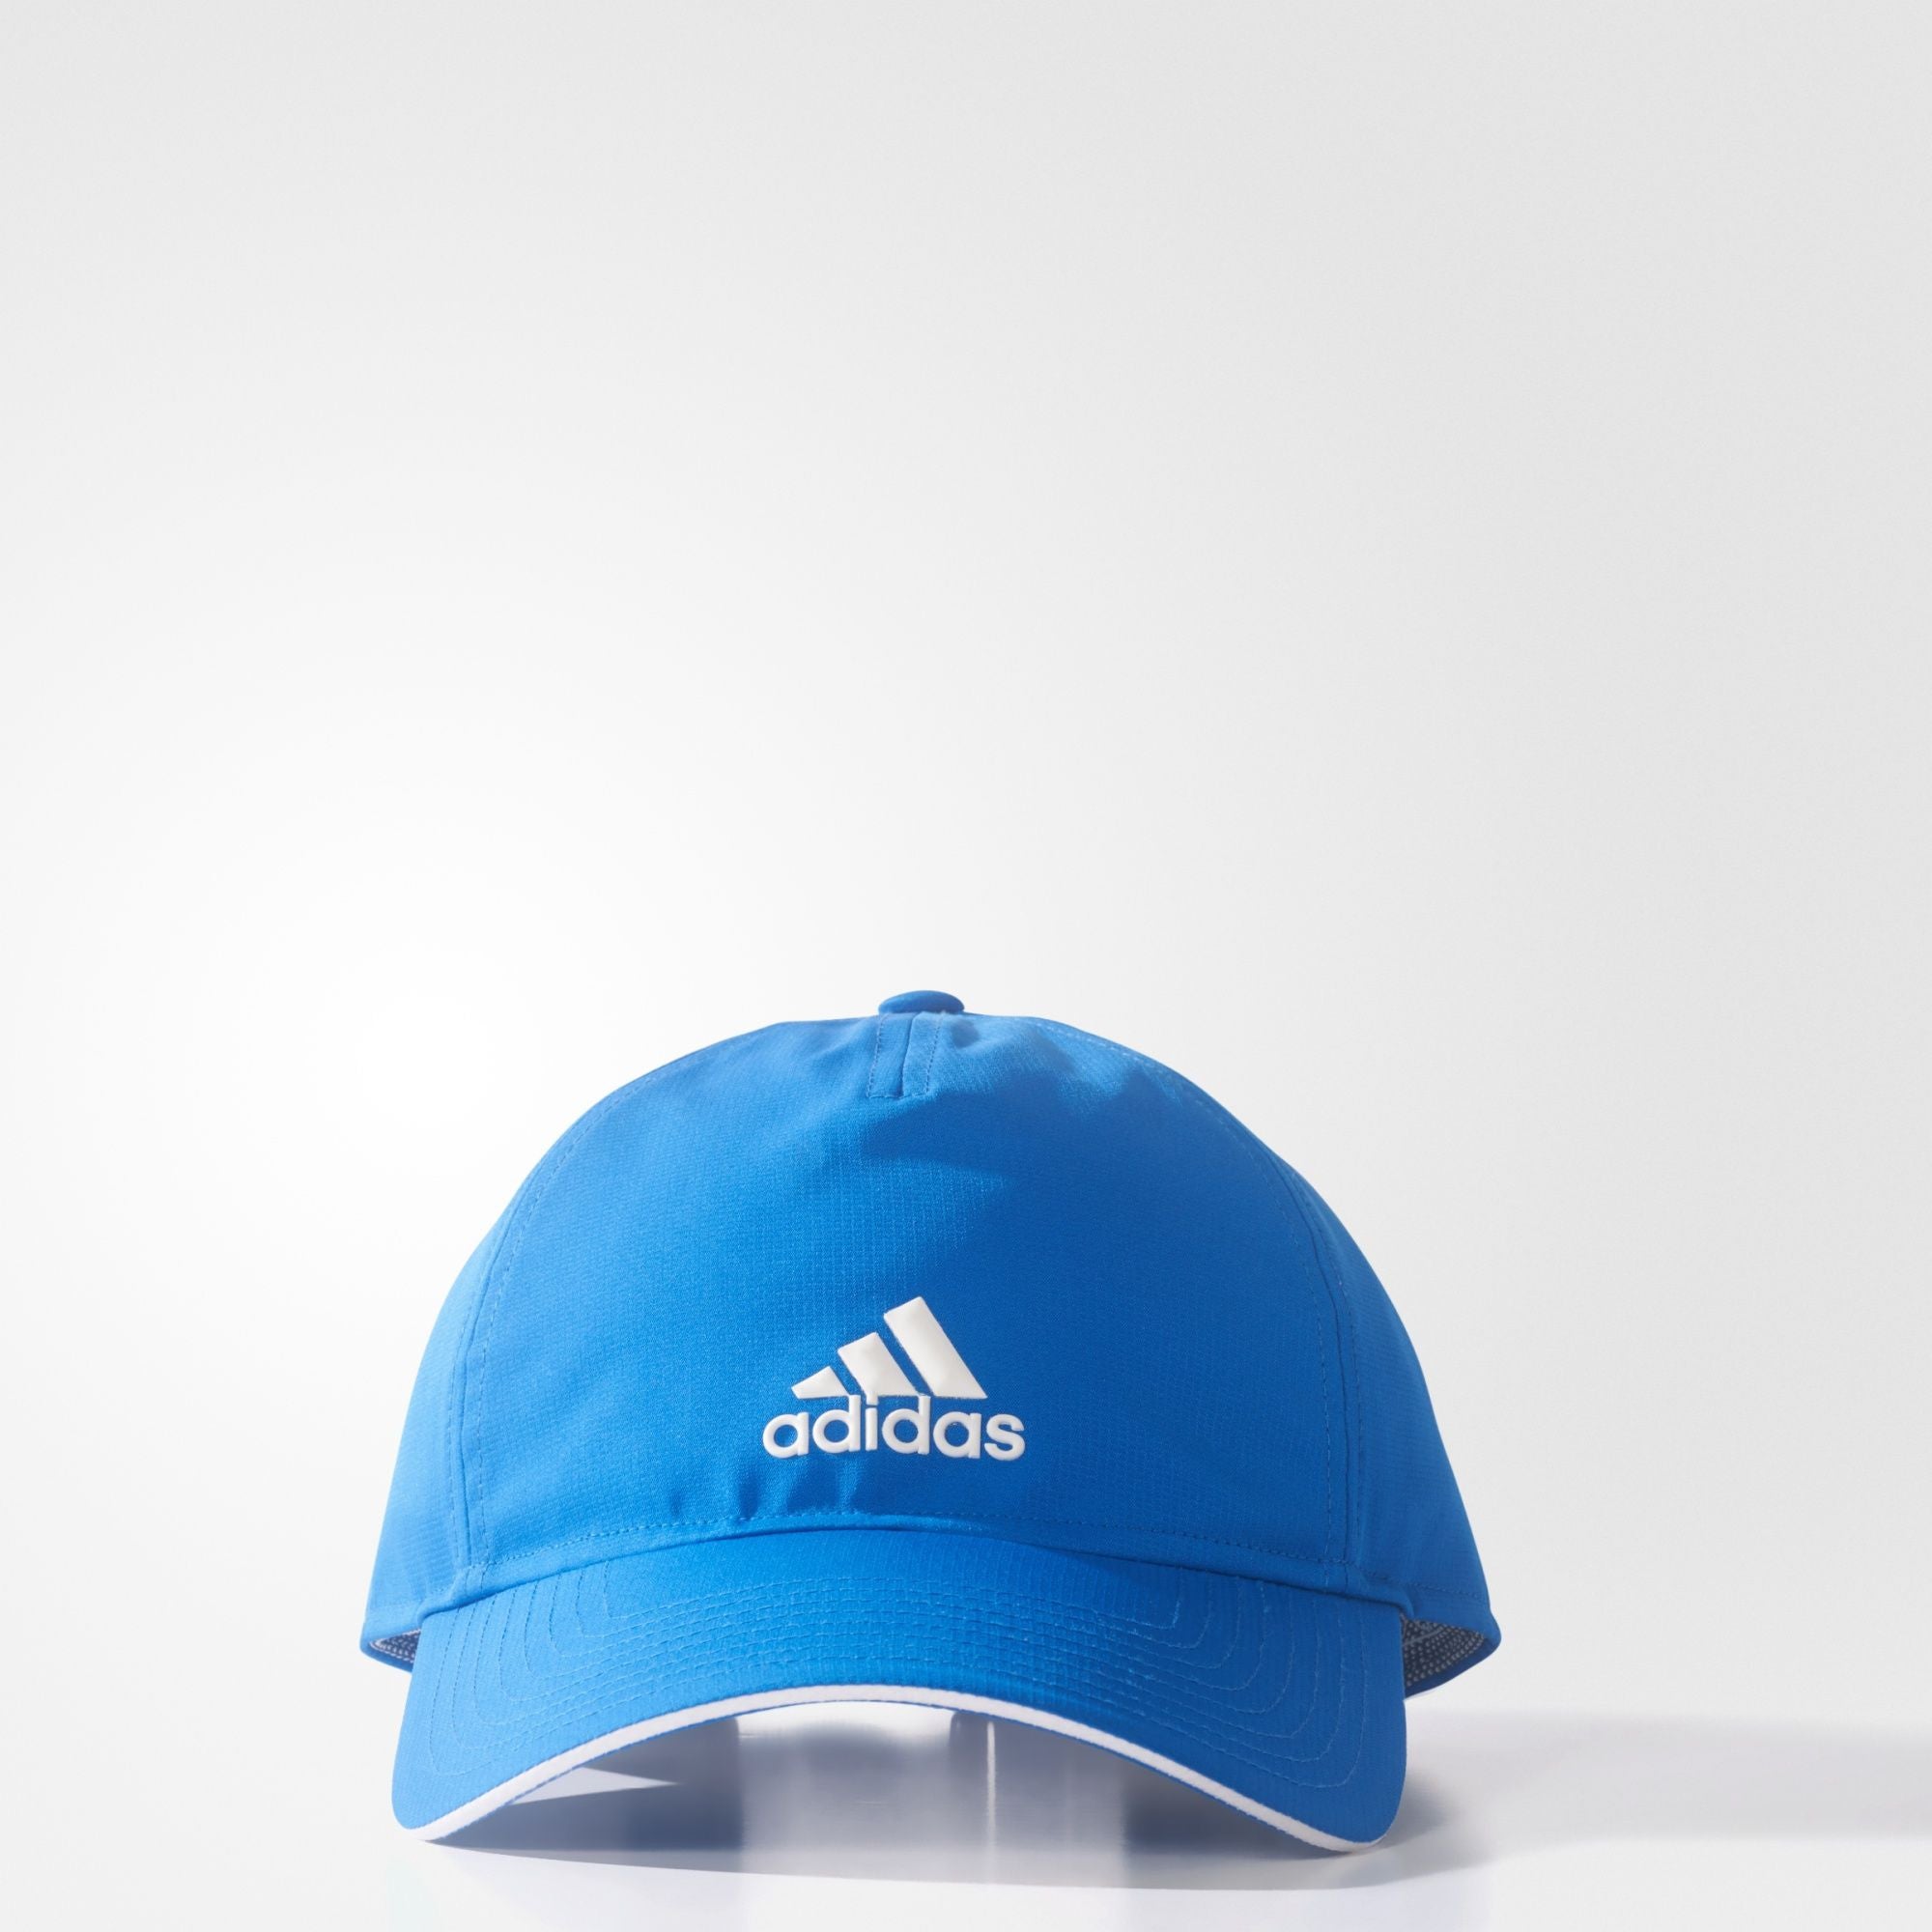 adidas youth hat